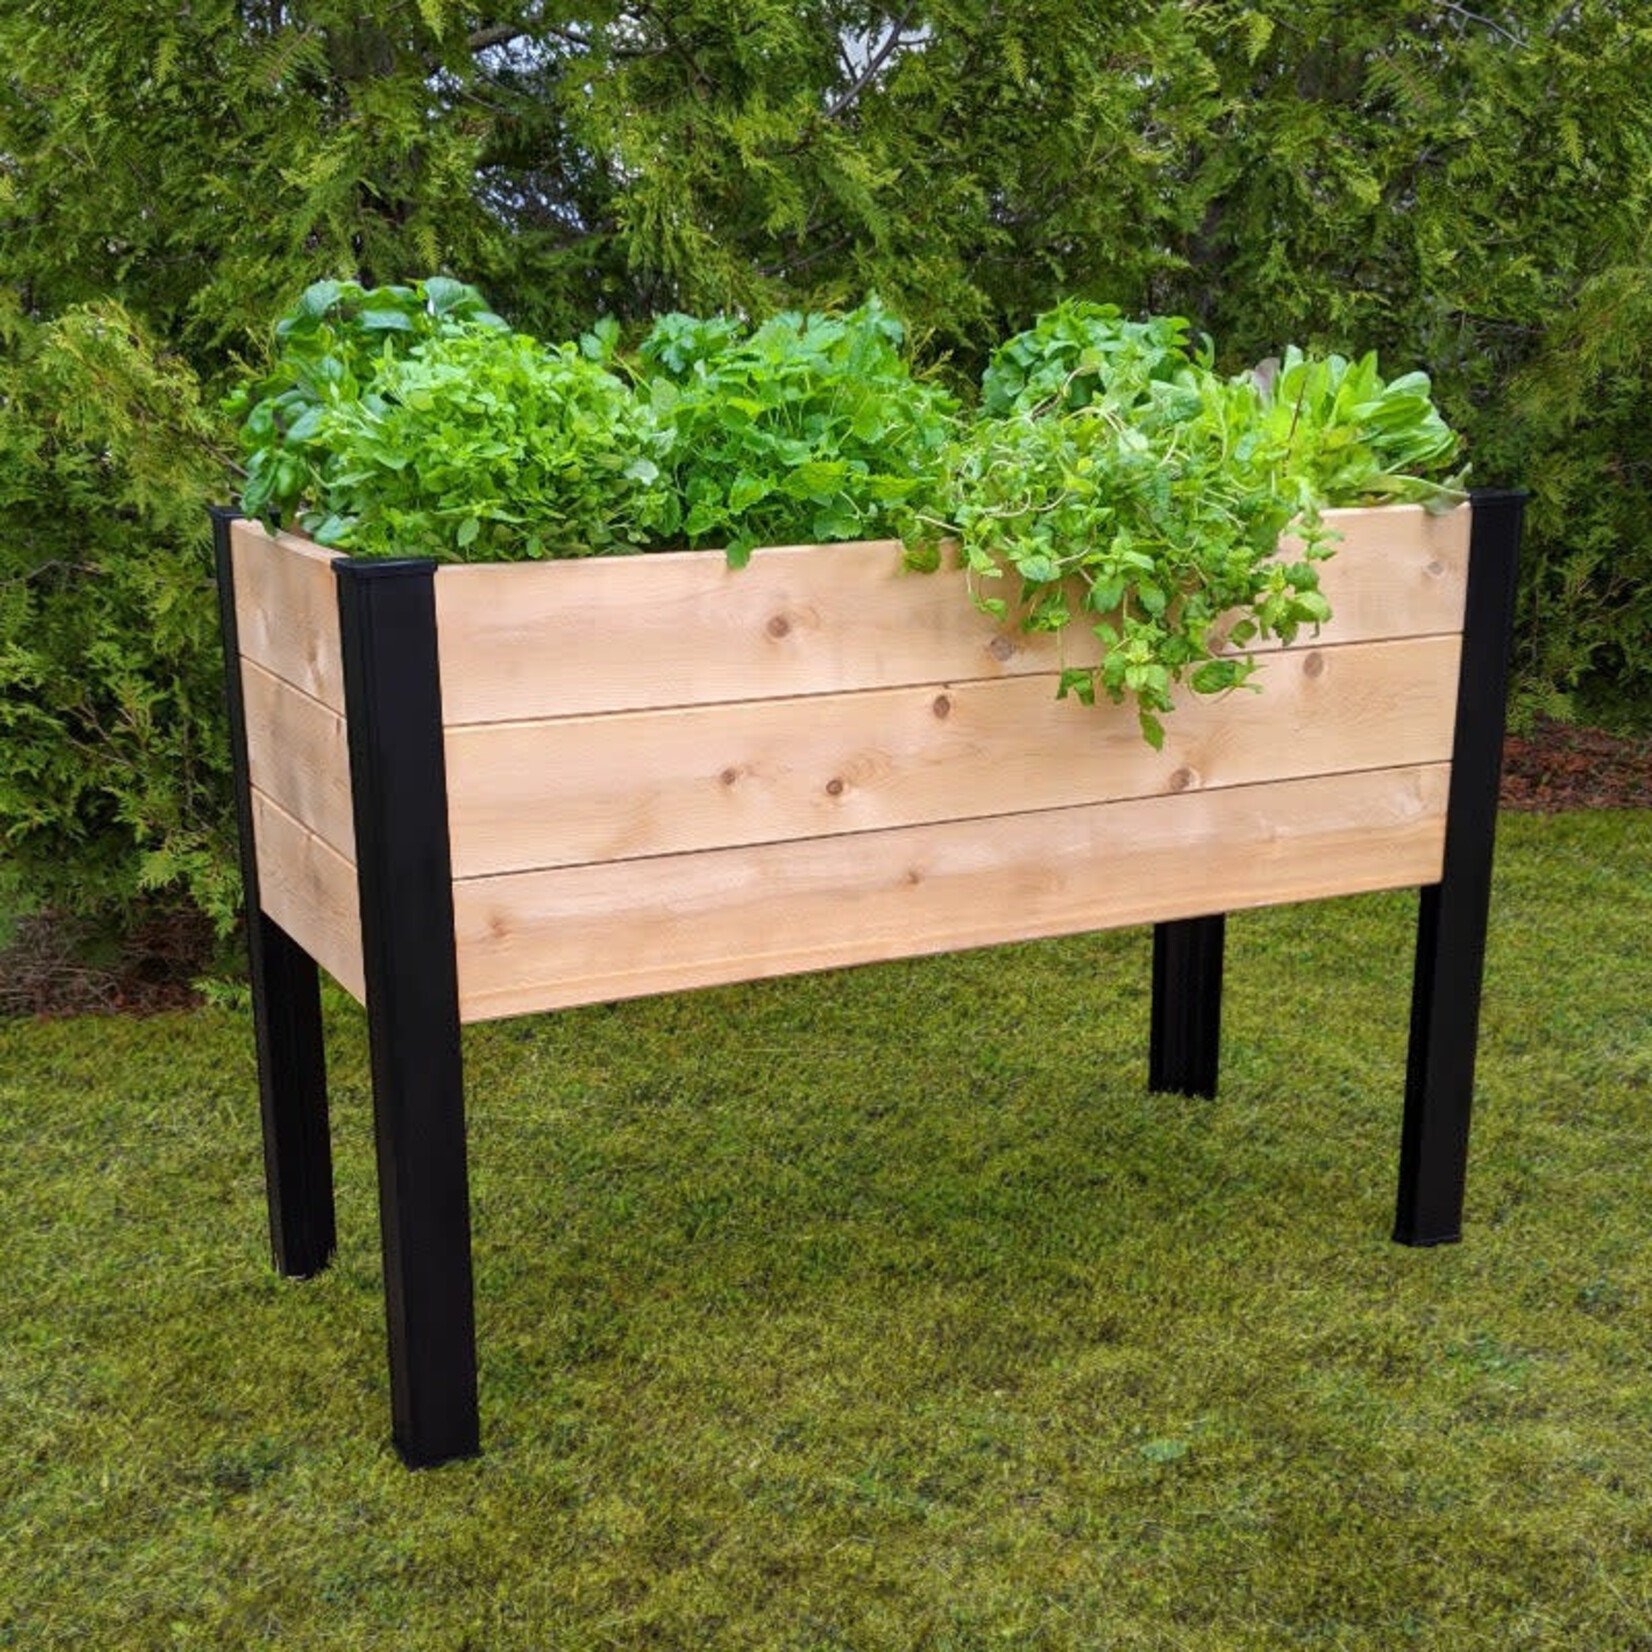 Multinautic Customizable 28-inch Raised Planter Box Kit | No Wood